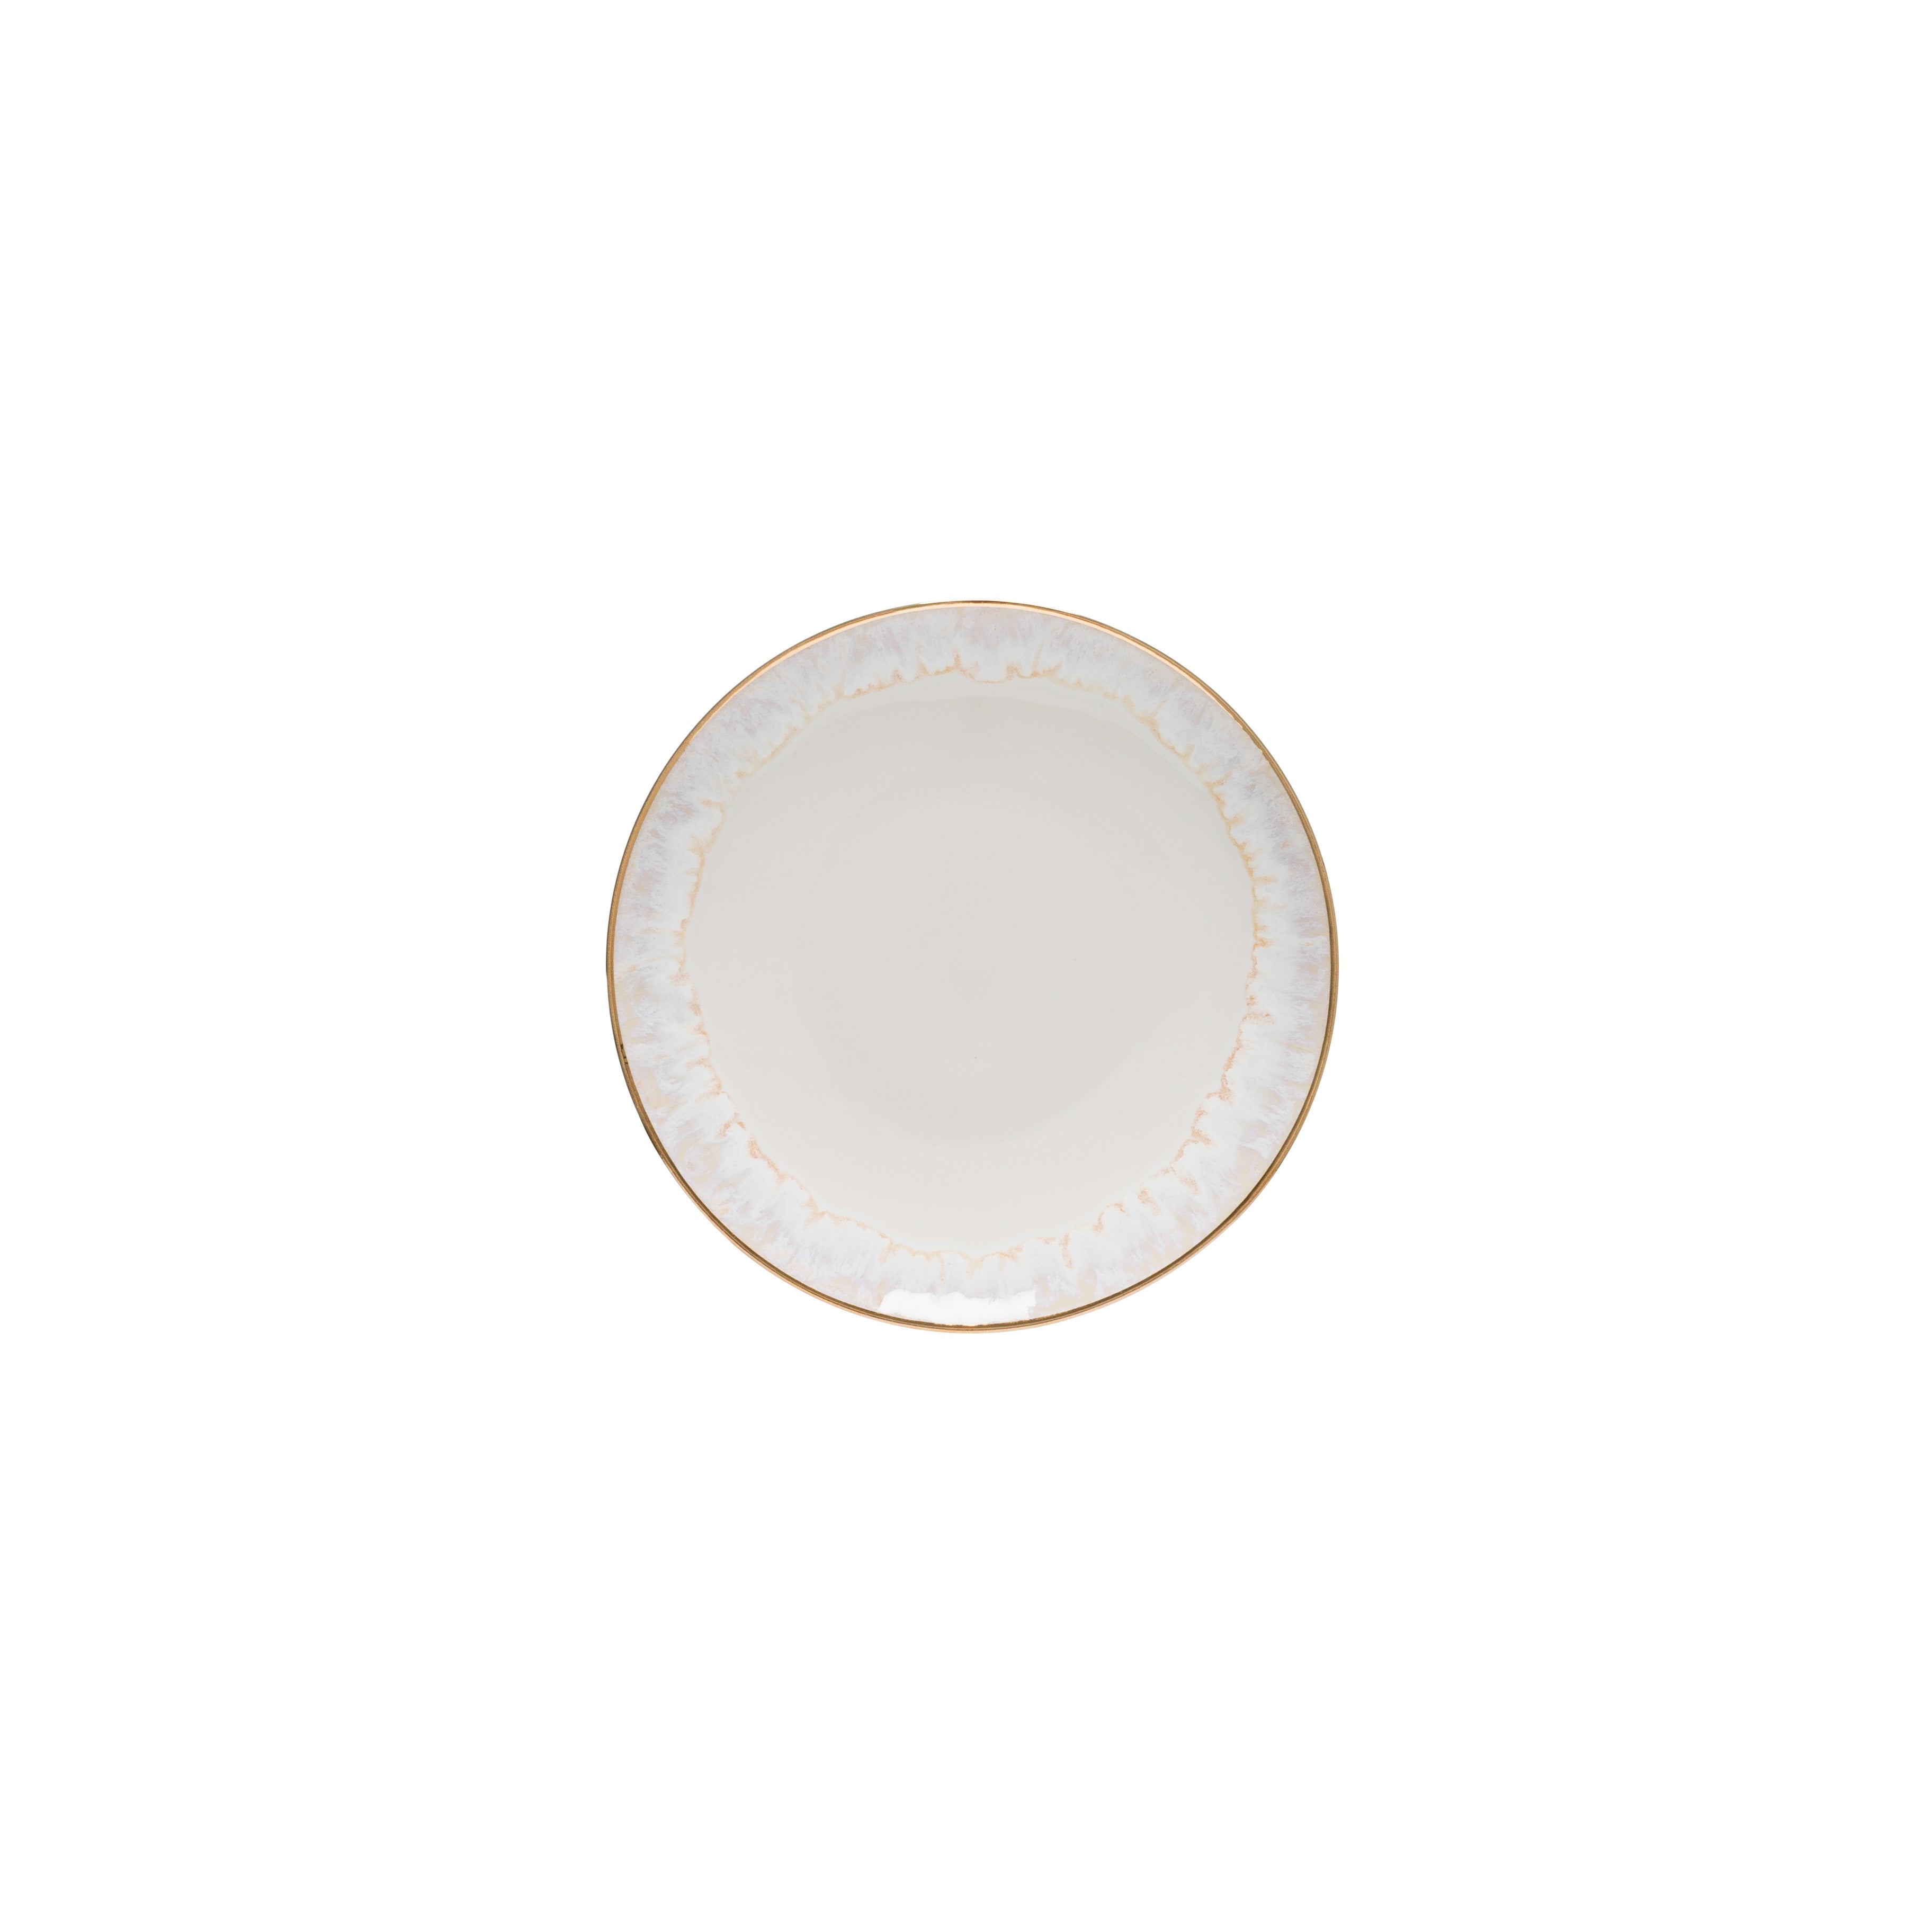 Taormina Bread Plate 7" White & Gold